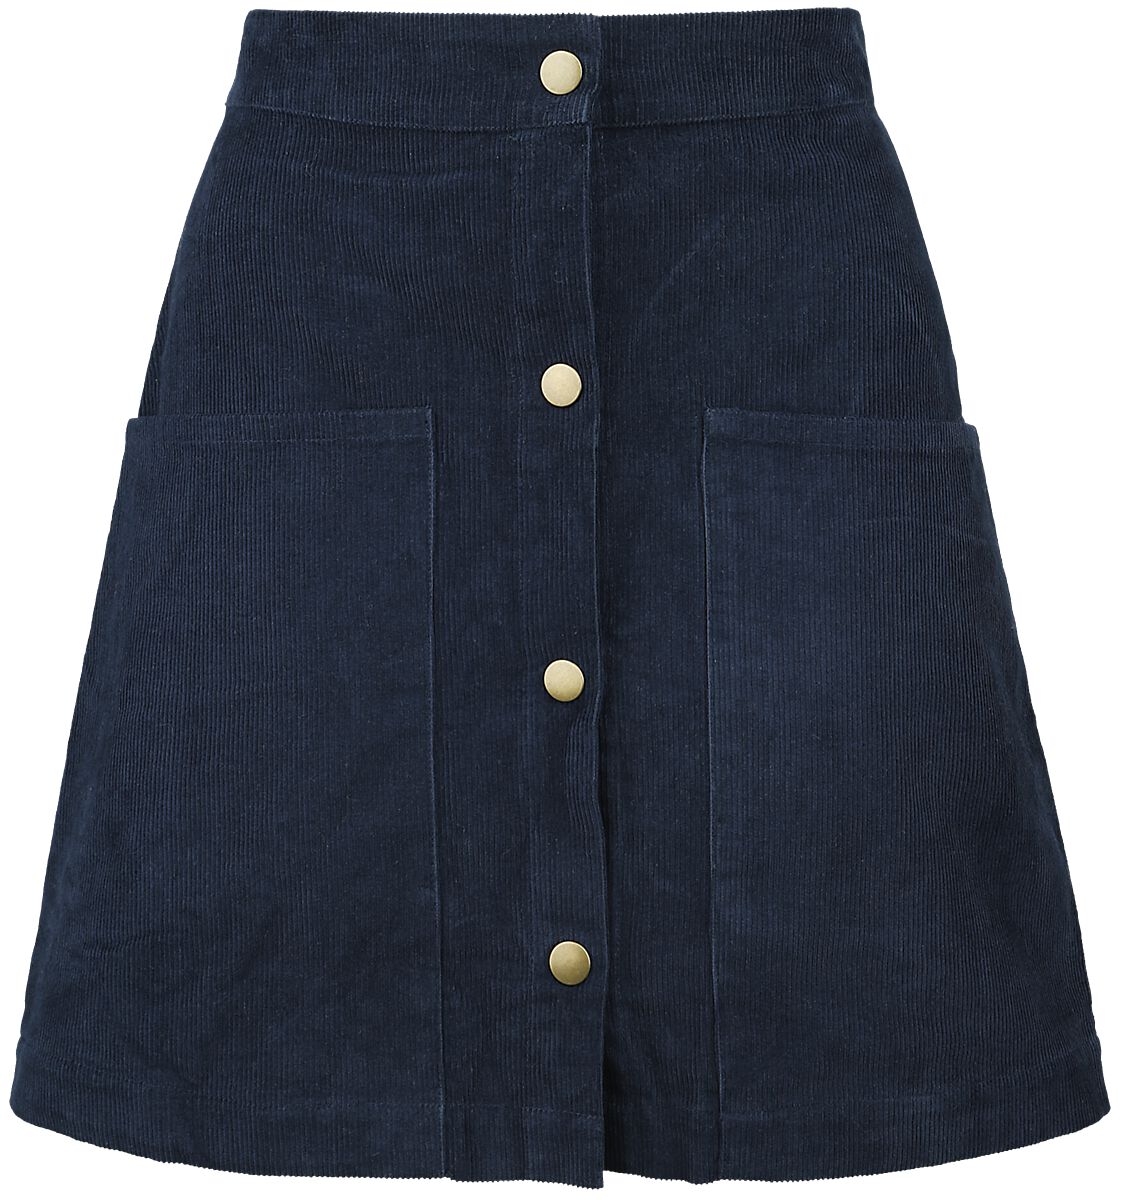 Timeless London Kurzer Rock - Moxy Skirt - XS bis XL - für Damen - Größe XL - blau